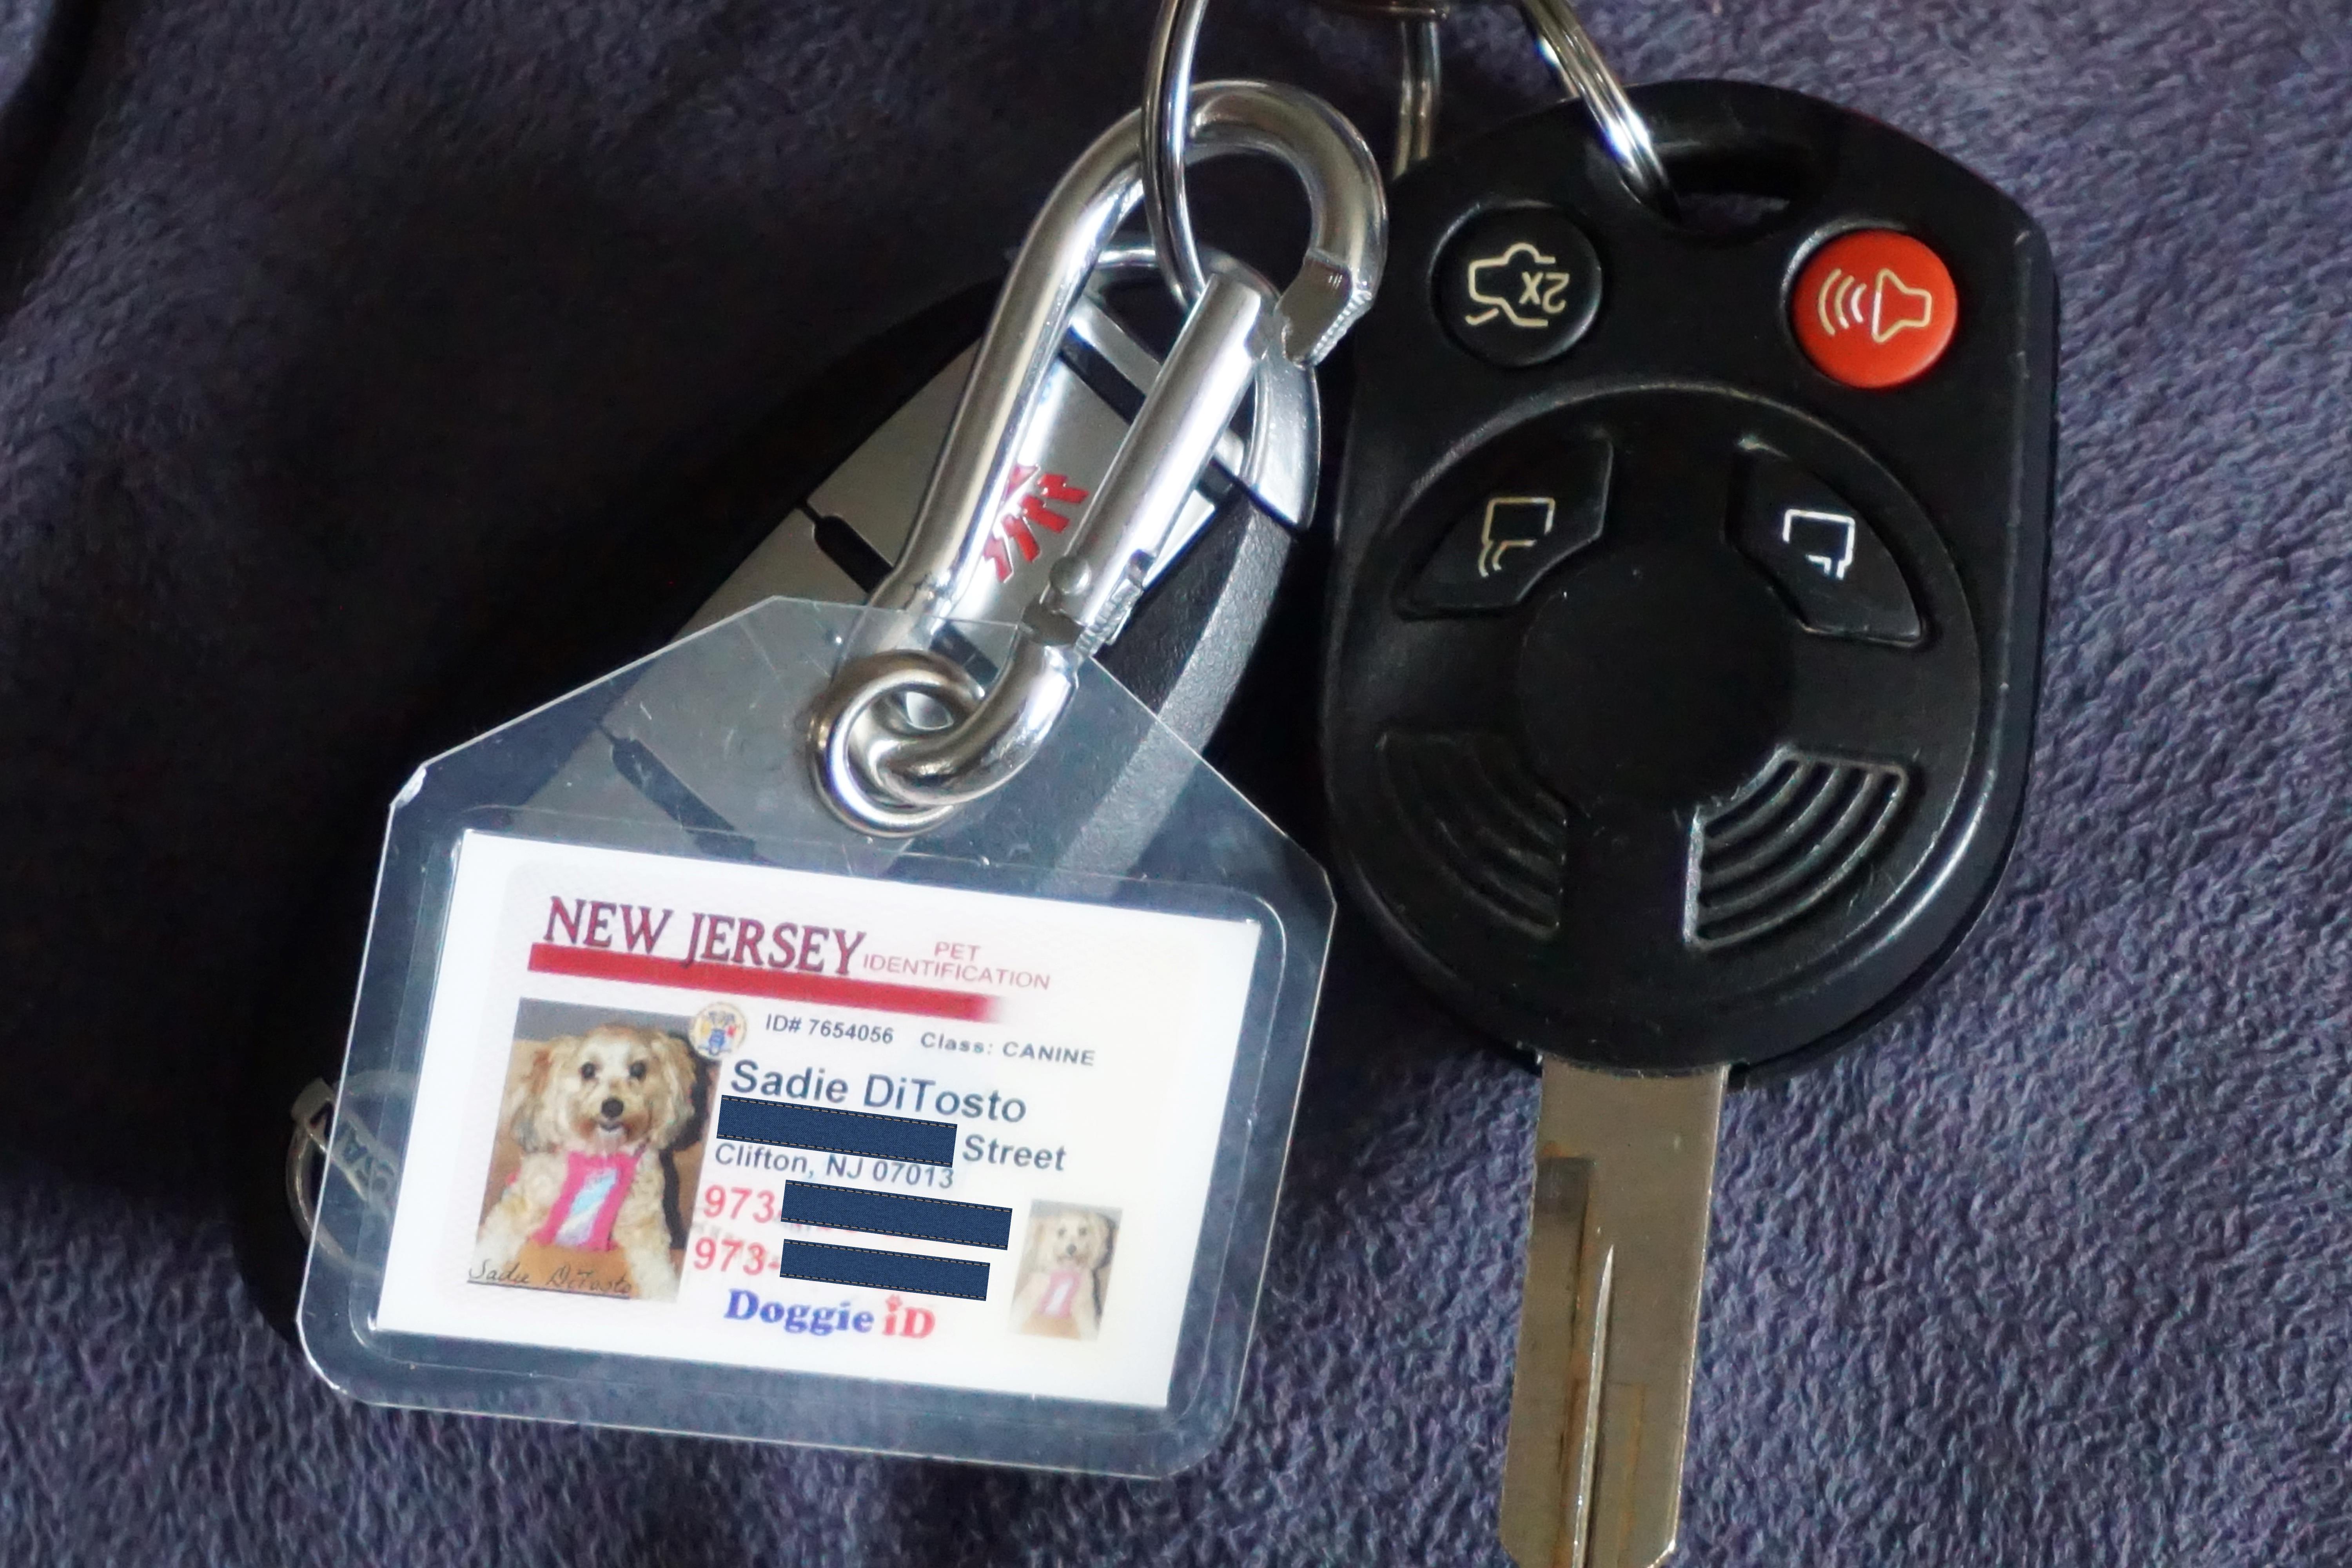 car keys, id tag, dog tag, driver's license